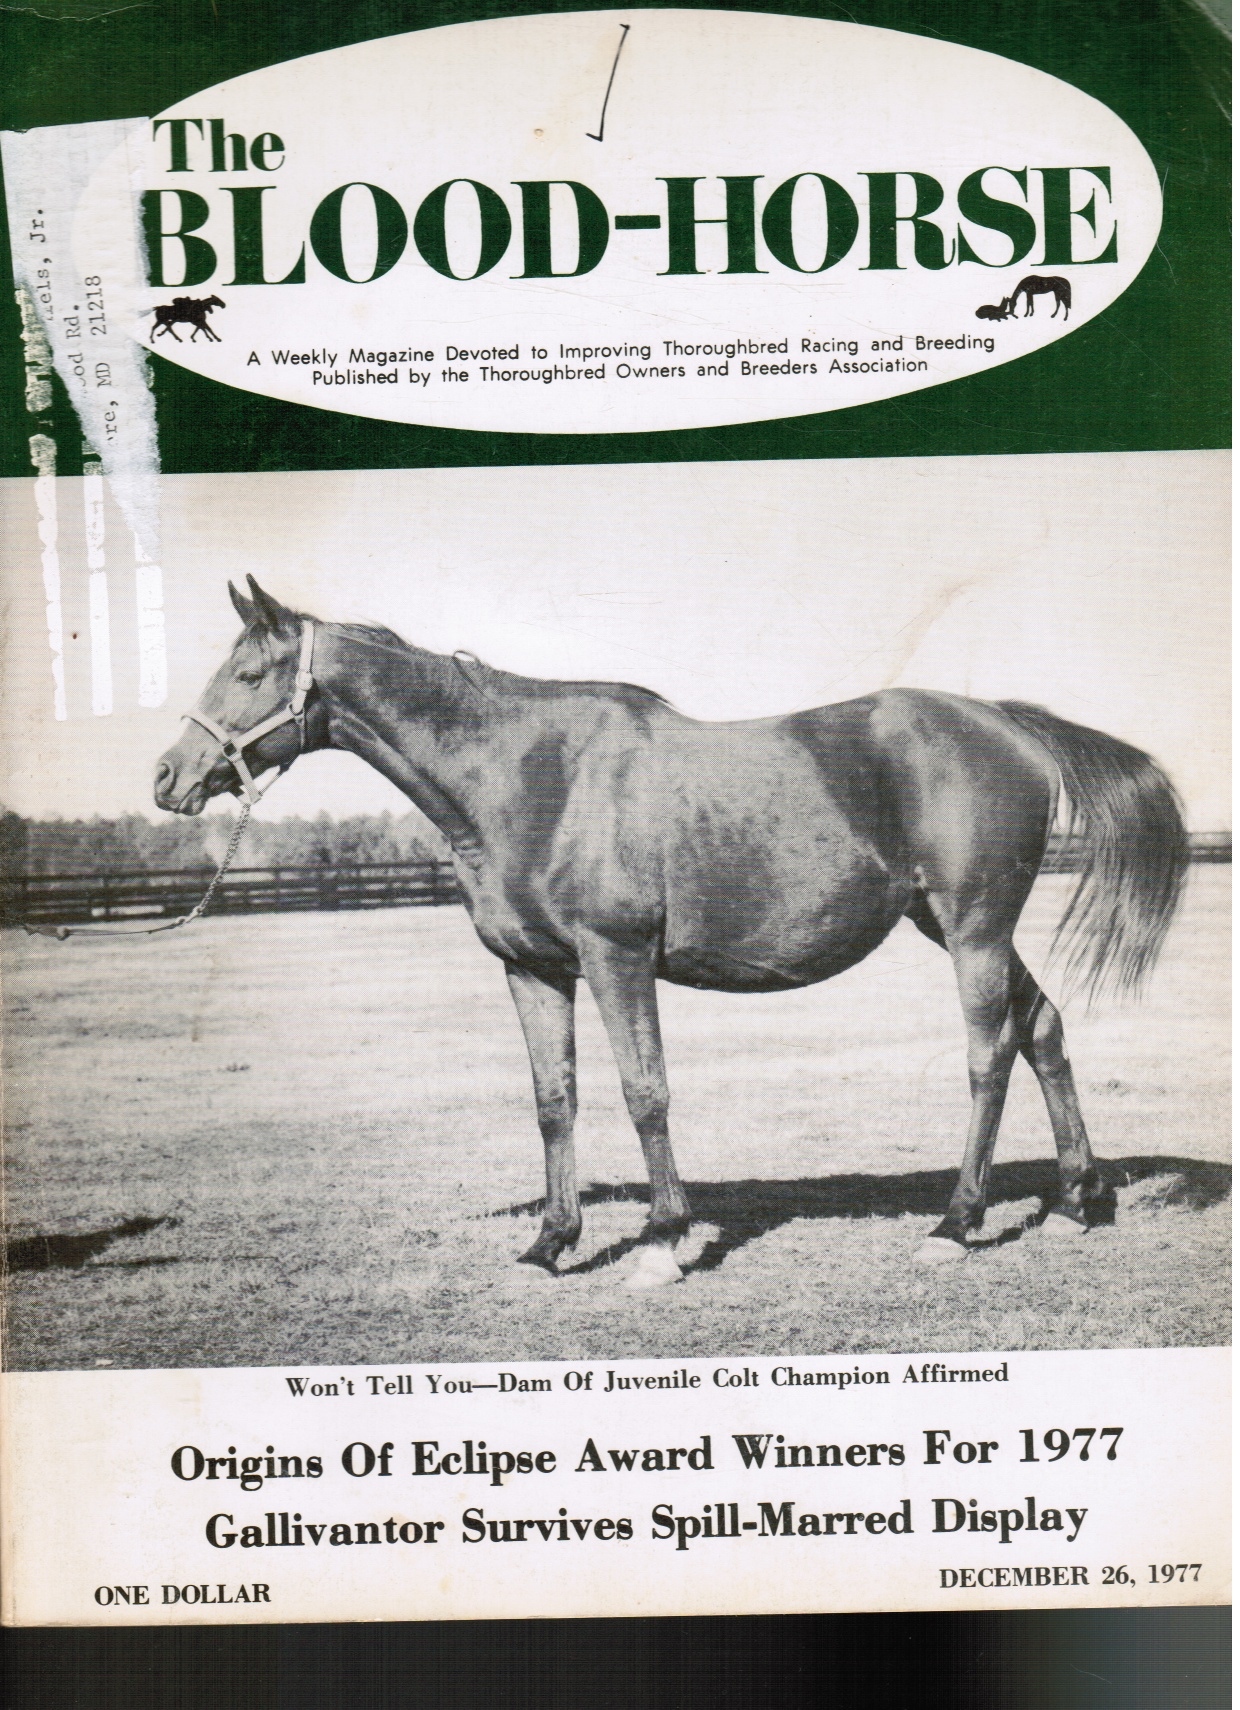 KENT HOLLINGSWORTH, EDITOR - The Blood-Horse: Vol Ciii, No. 52, December 1977